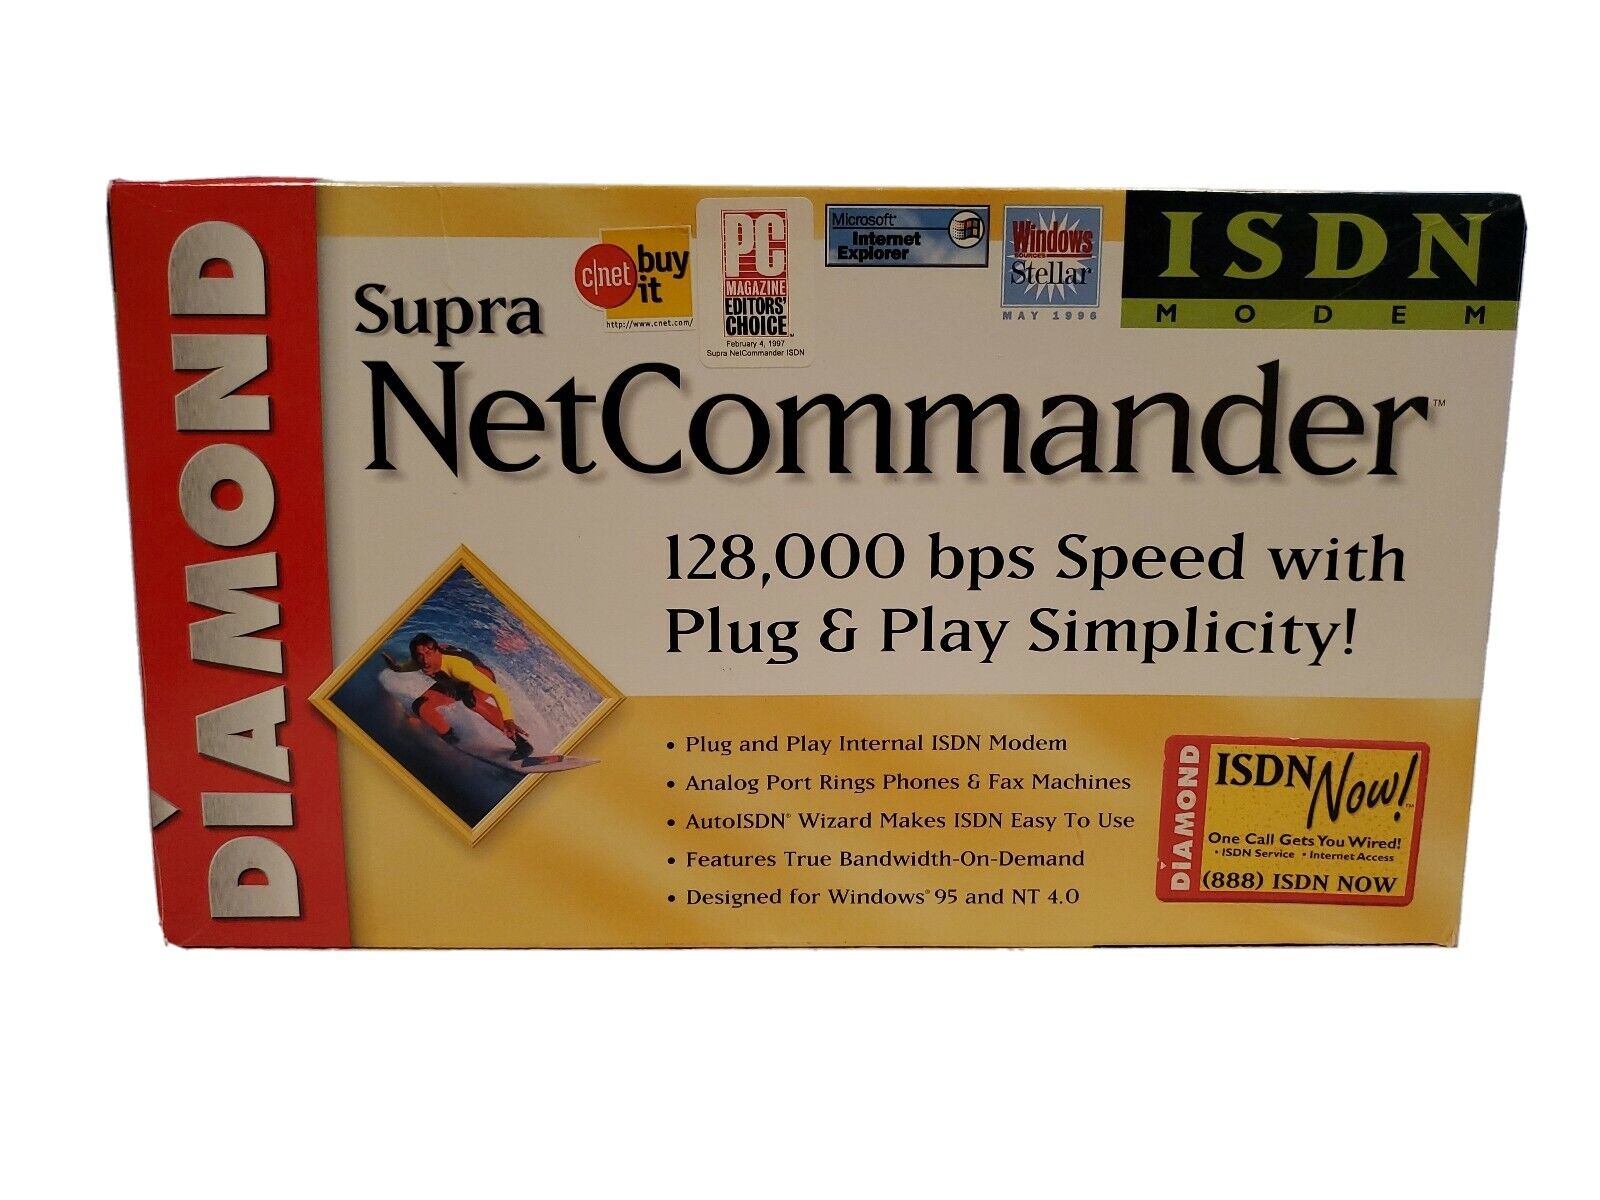 Diamond Supra Netcommander 128k bps ISDN Modem - Vintage Win95 NT 4.0 ISA